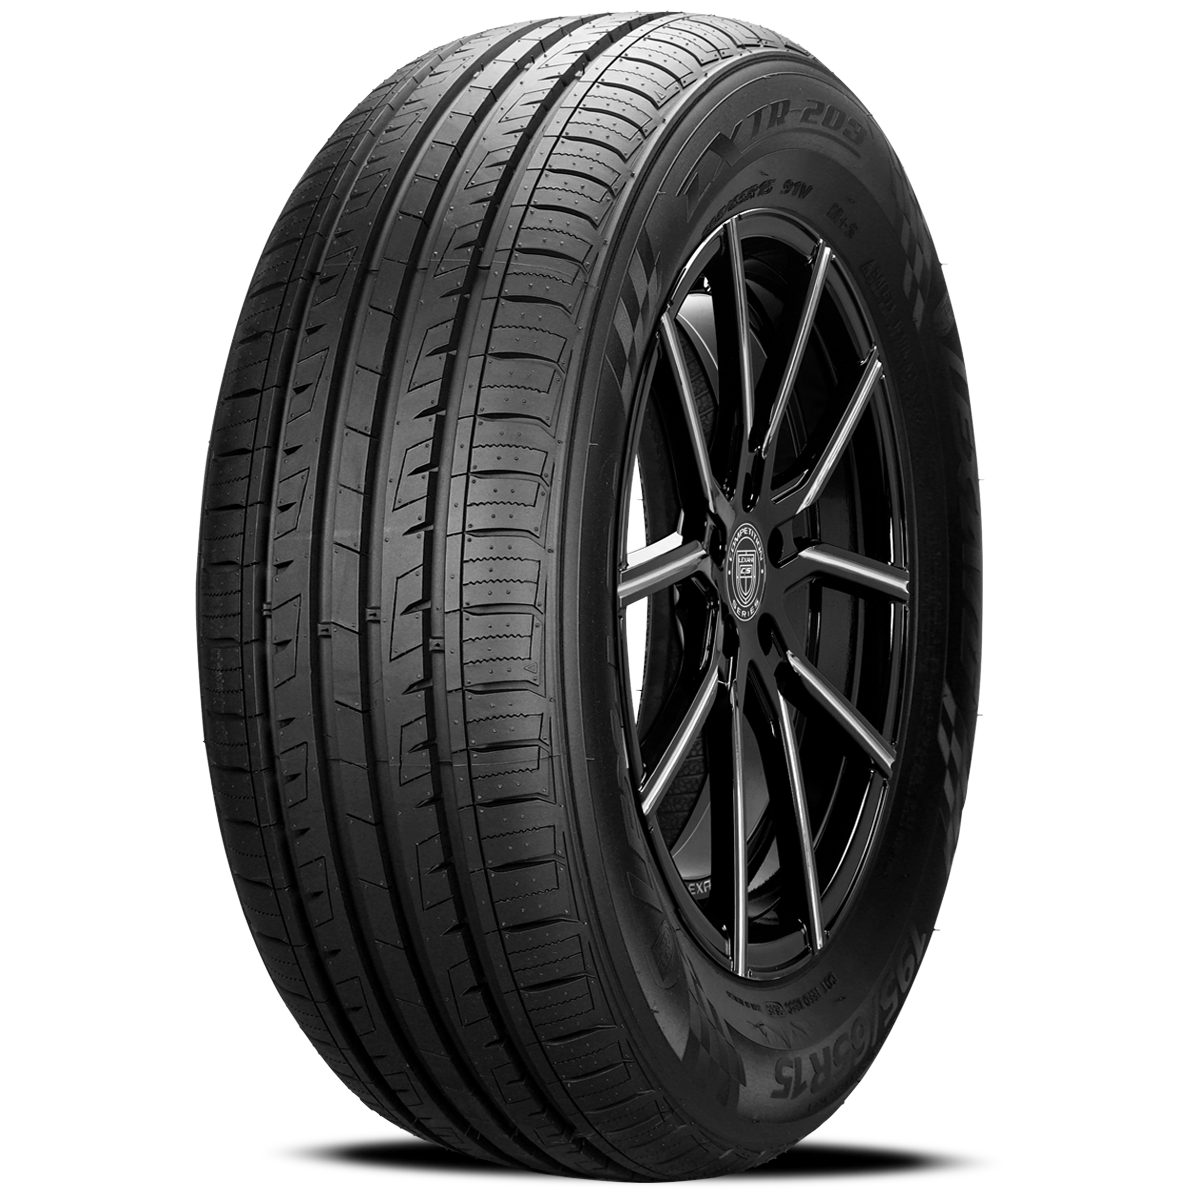 LEXANI LXTR-203 215/60R16 (26.1X8.5R 16) Tires